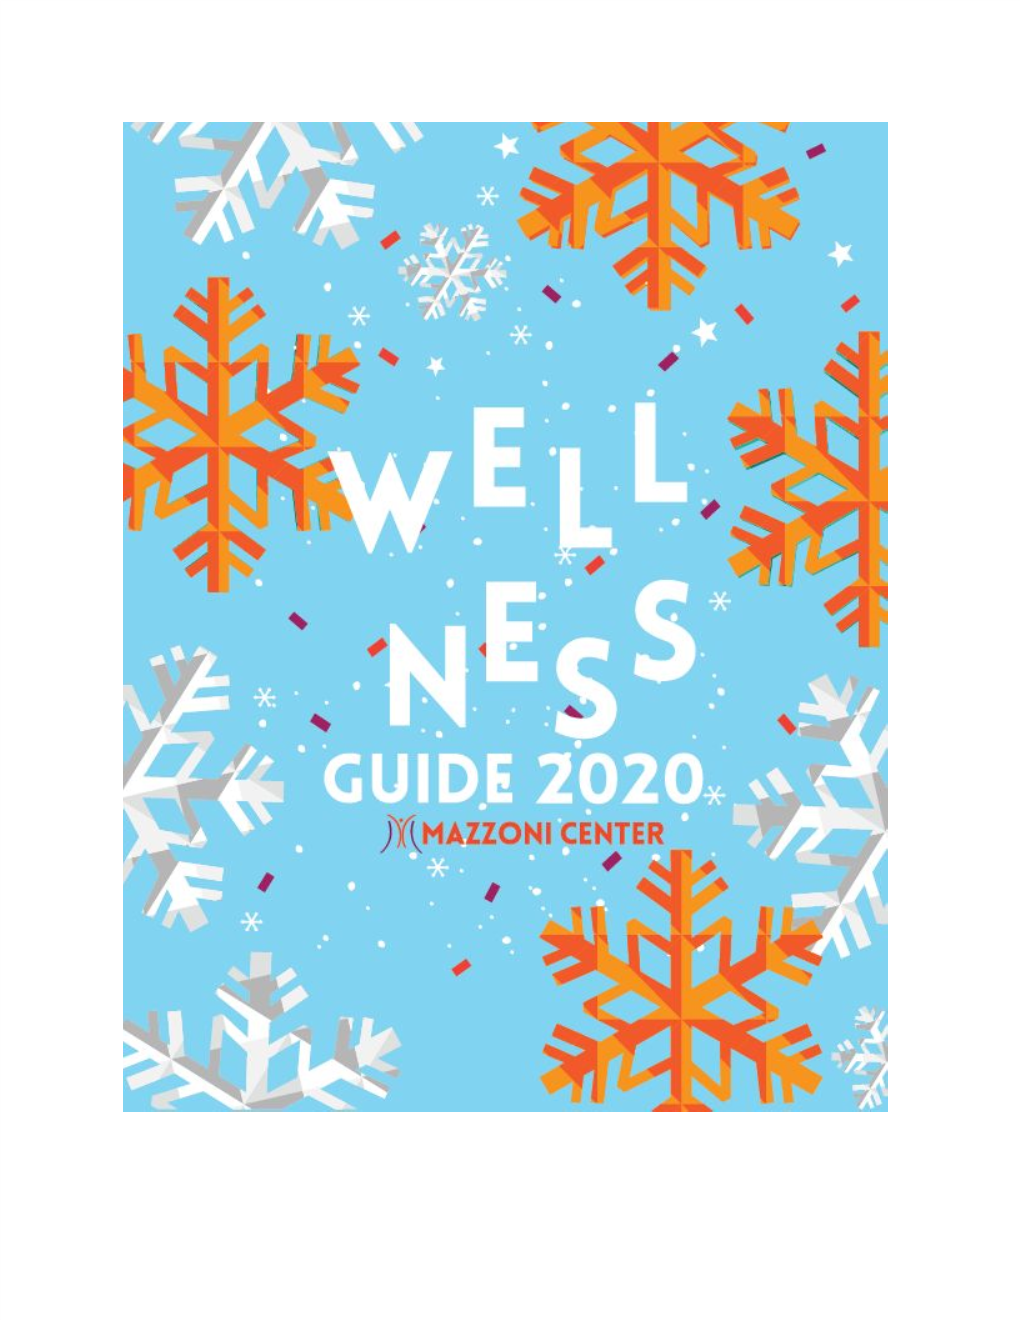 Mazzoni Center's Wellness Guide